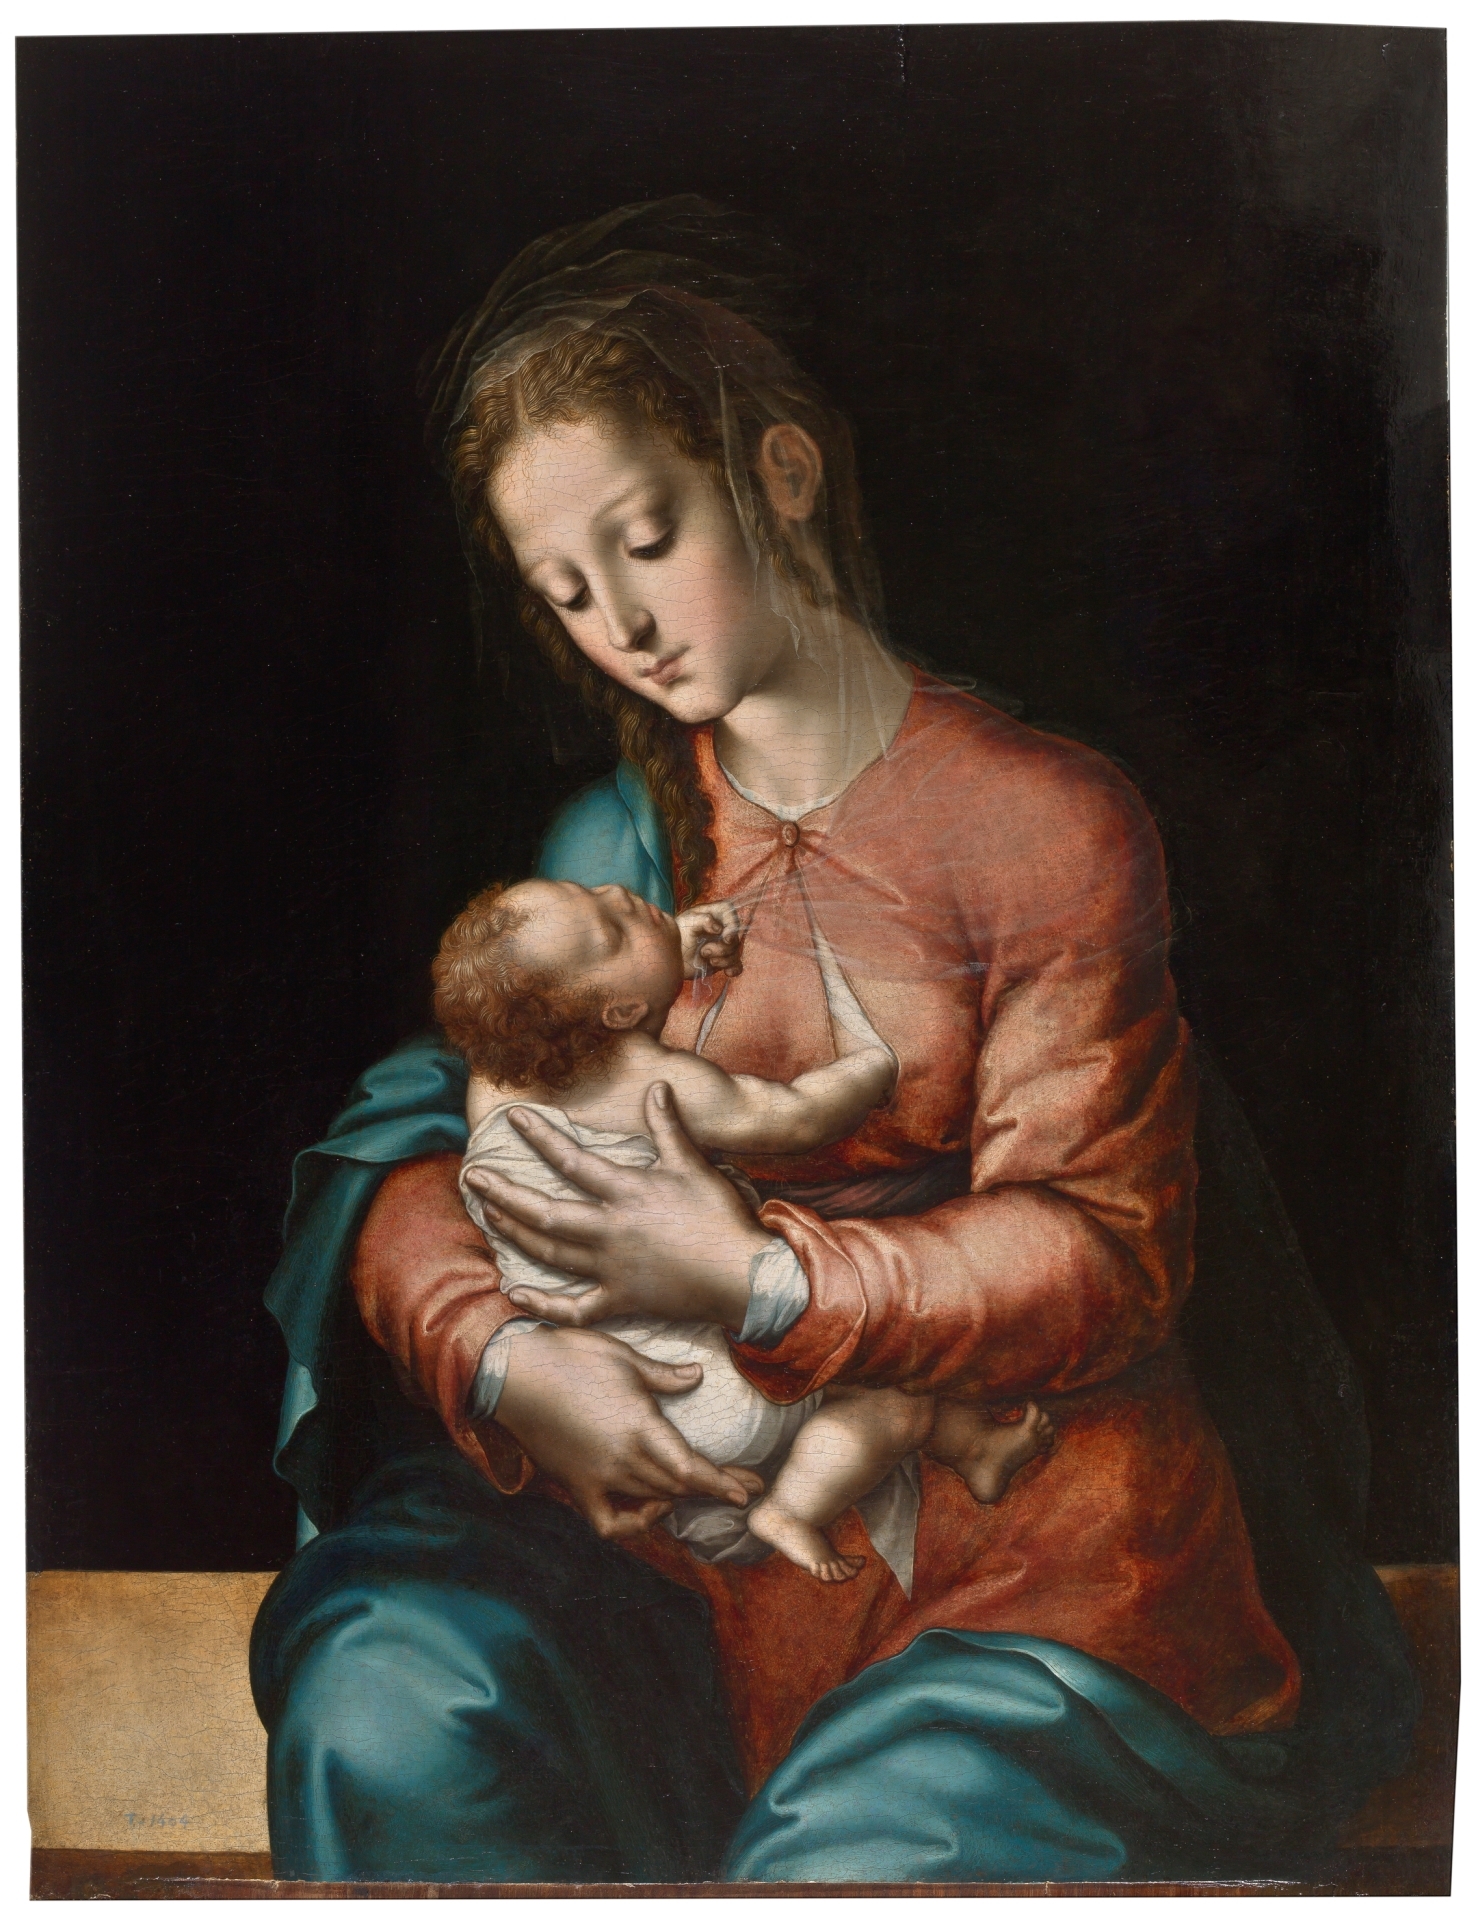 Madonna and Child Religious Italian Painting Breastfeeding 17th Century  Baroque